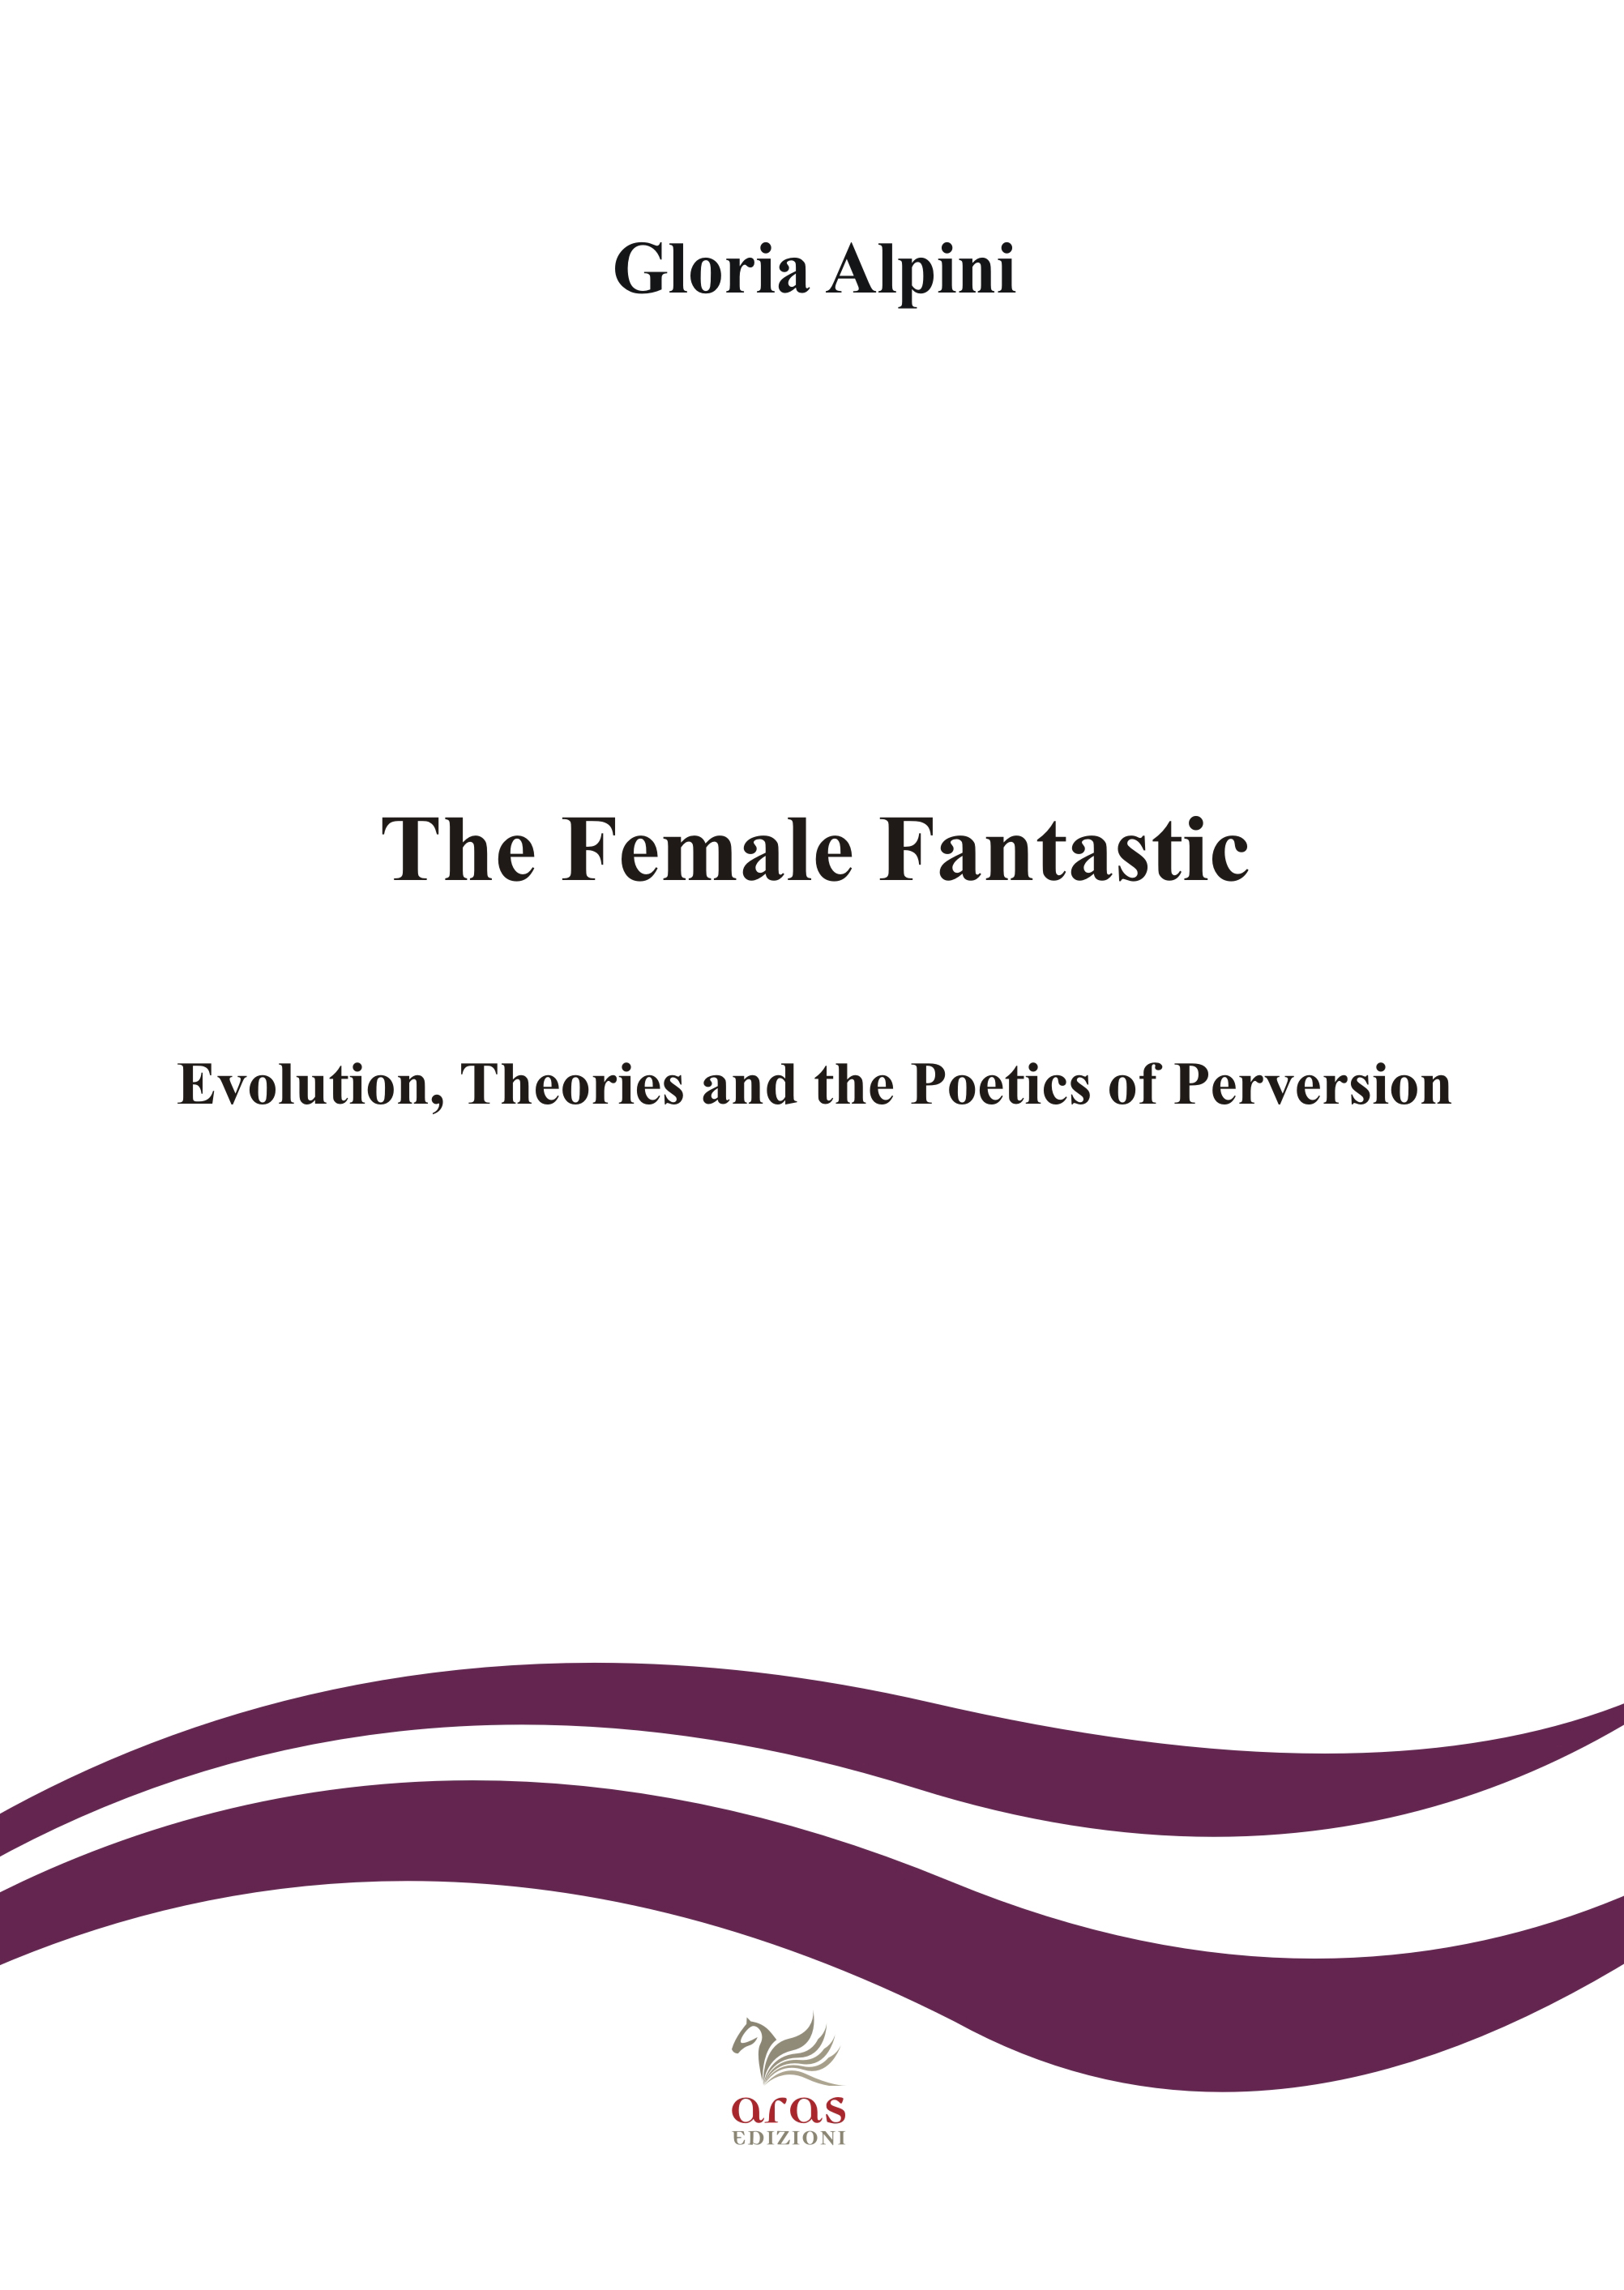 E-book, The female fantastic : evolution, theories and the poetics of perversion, Alpini, Gloria, Aras